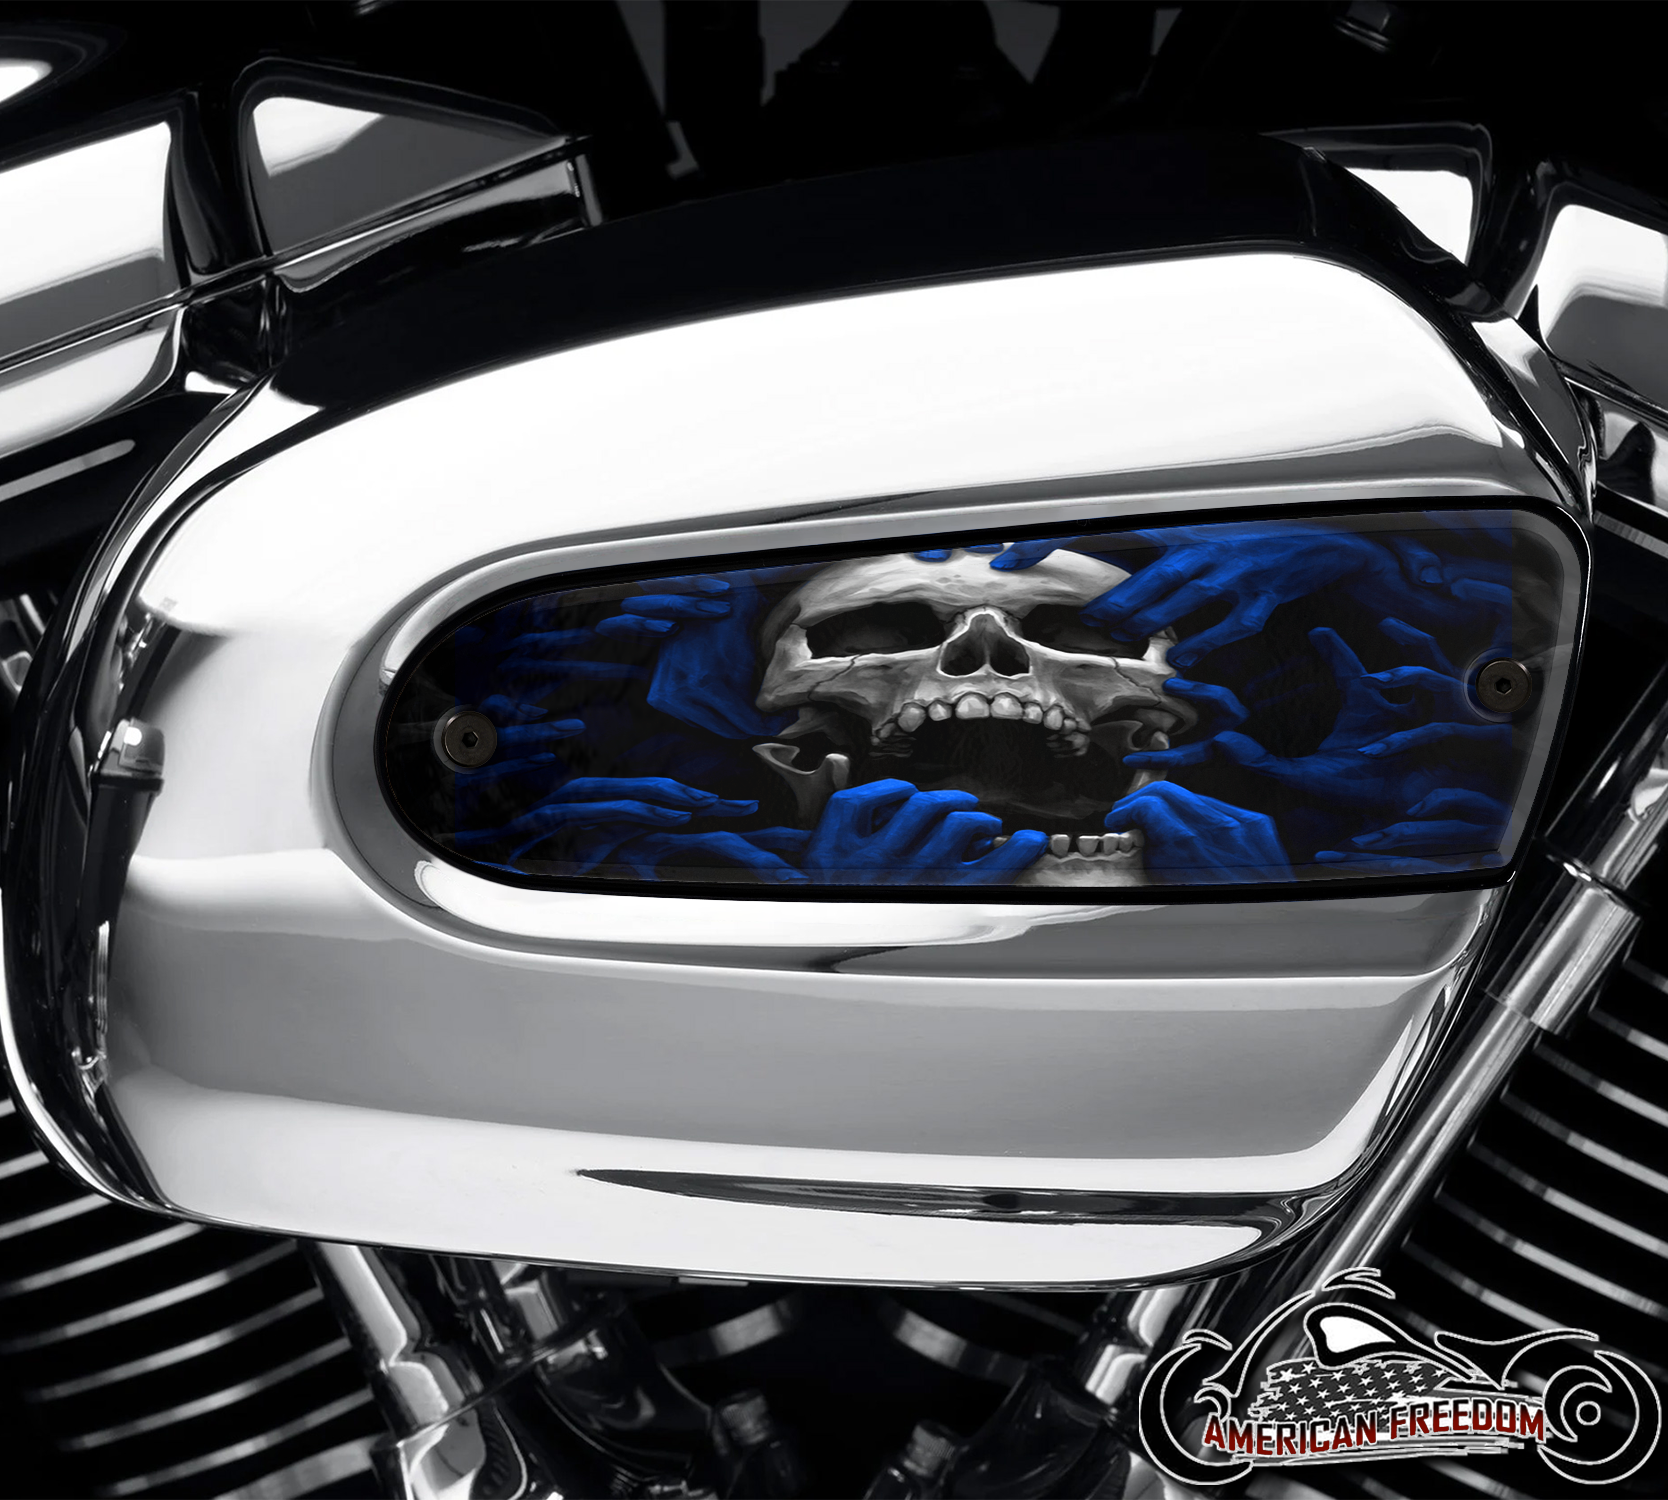 Harley Davidson Wedge Air Cleaner Insert - Torn Apart Skull Blue